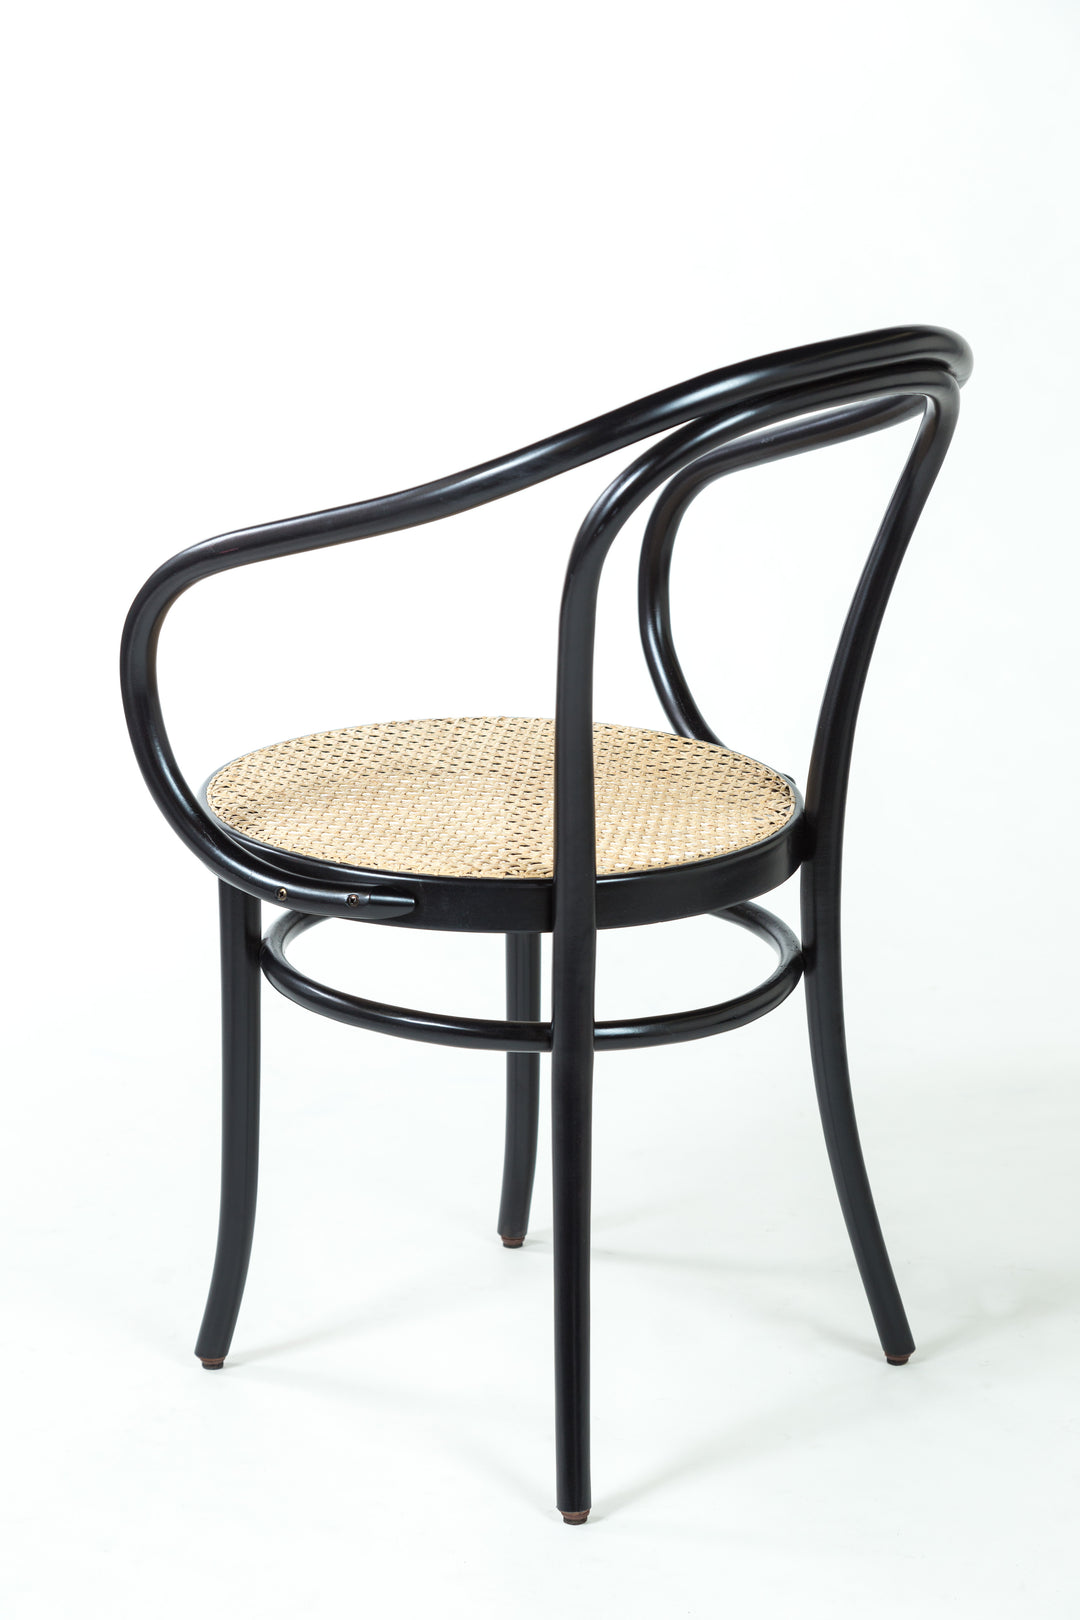 No. B9 Le Corbusier Cane Seat Arm Chair - Black